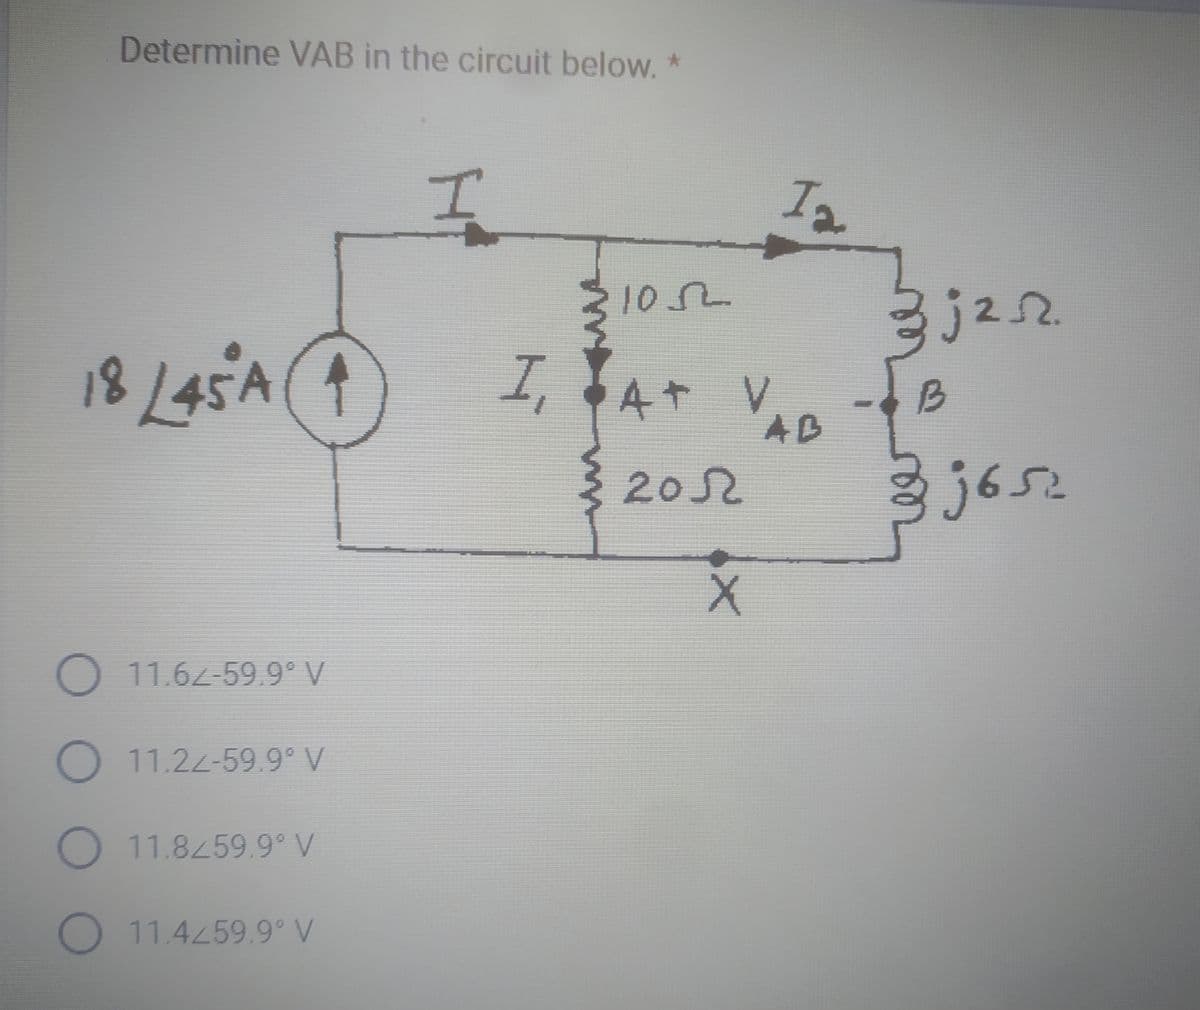 Determine VAB in the circuit below. *
18/45 A ↑
O 11.62-59.9° V
O 11.22-59.9° V
O 11.8/59.9° V
O 11.4259.9° V
I
31052
I, AT V
{2052
X
I₂
AB
3j25
B
33652